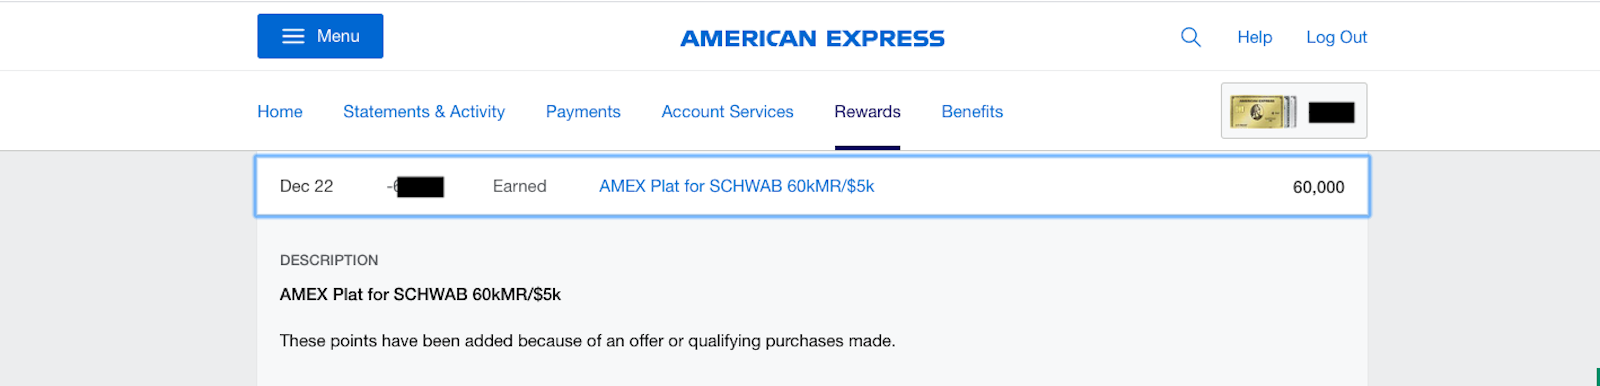 Schwab Amex Platinum Card welcome offer points 